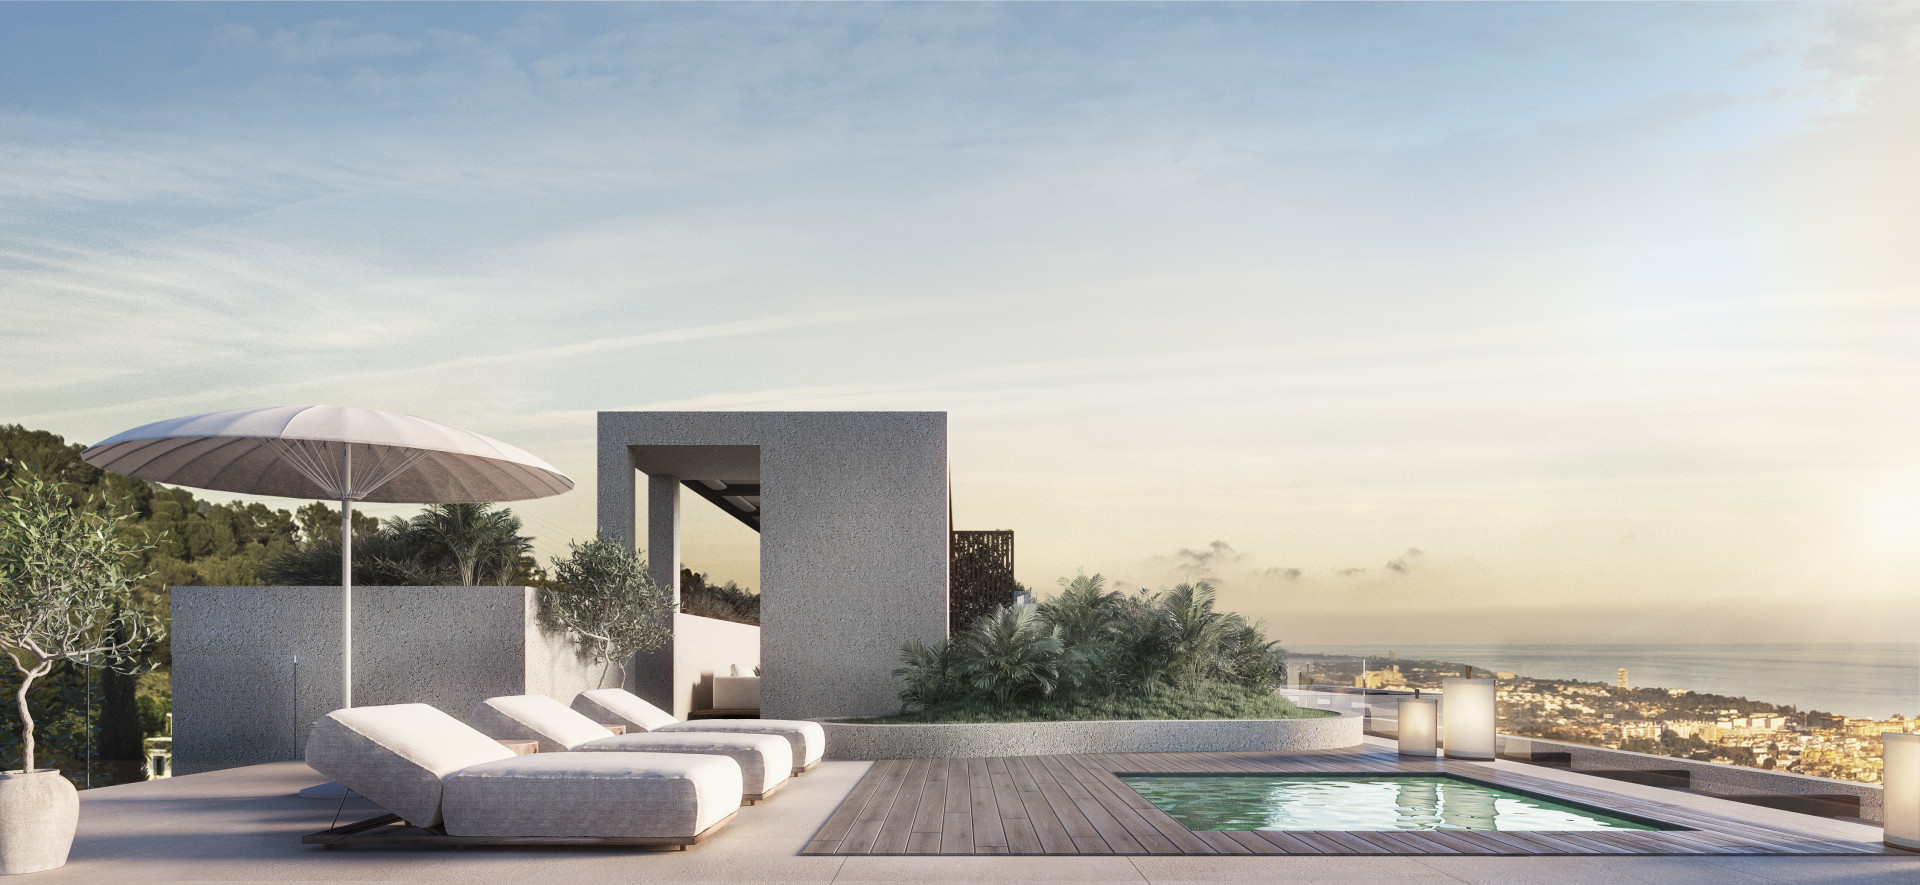 Exclusive villa with luxury finishes located in the urbanization Cascada de Camoján, in Marbella. | Image 1